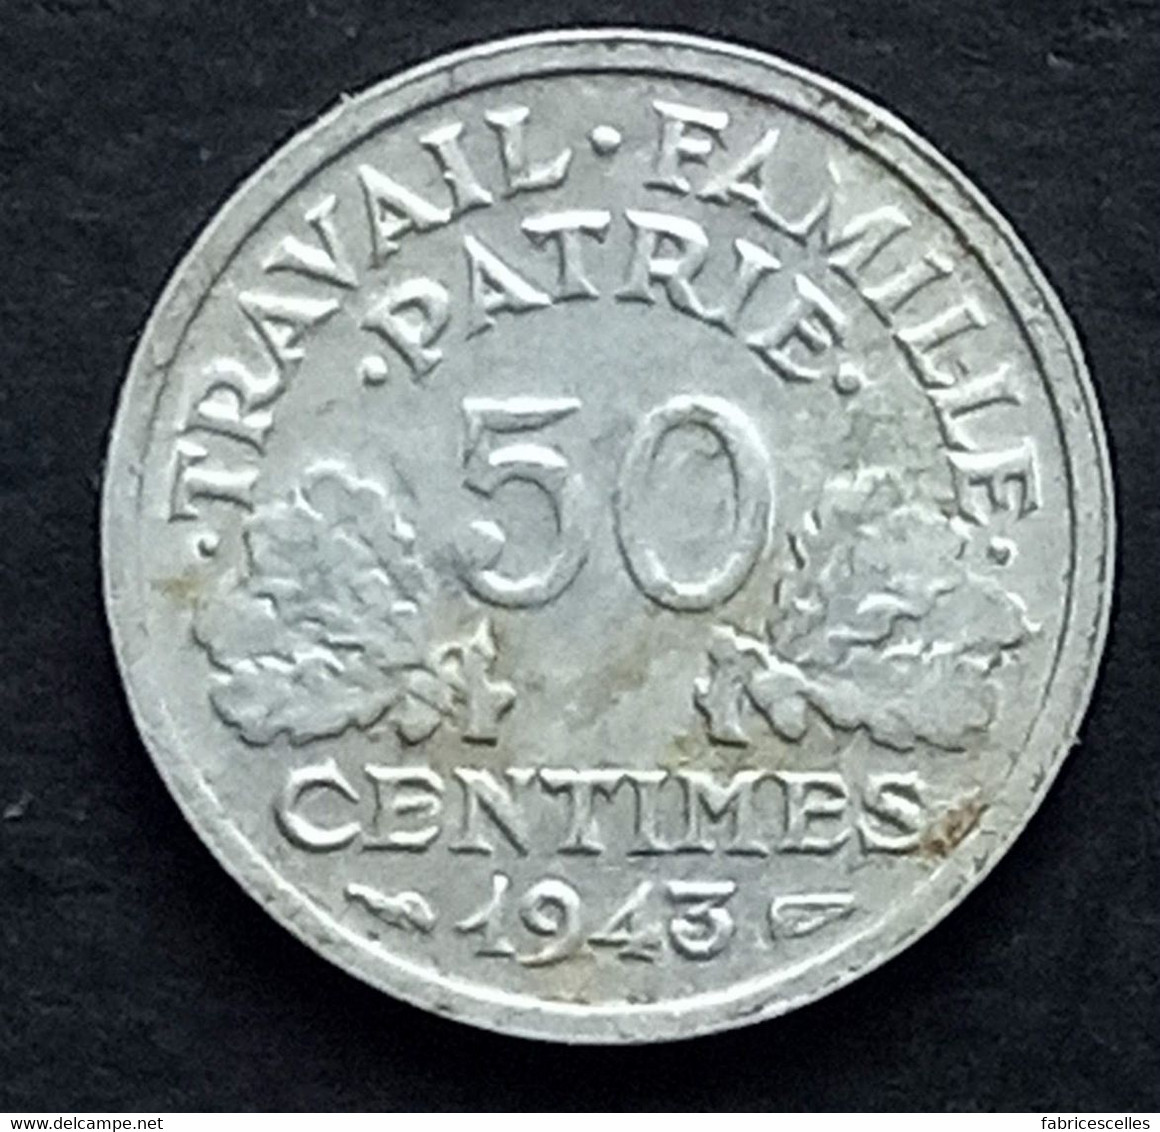 50 Centimes Bazor 1943 - 50 Centimes